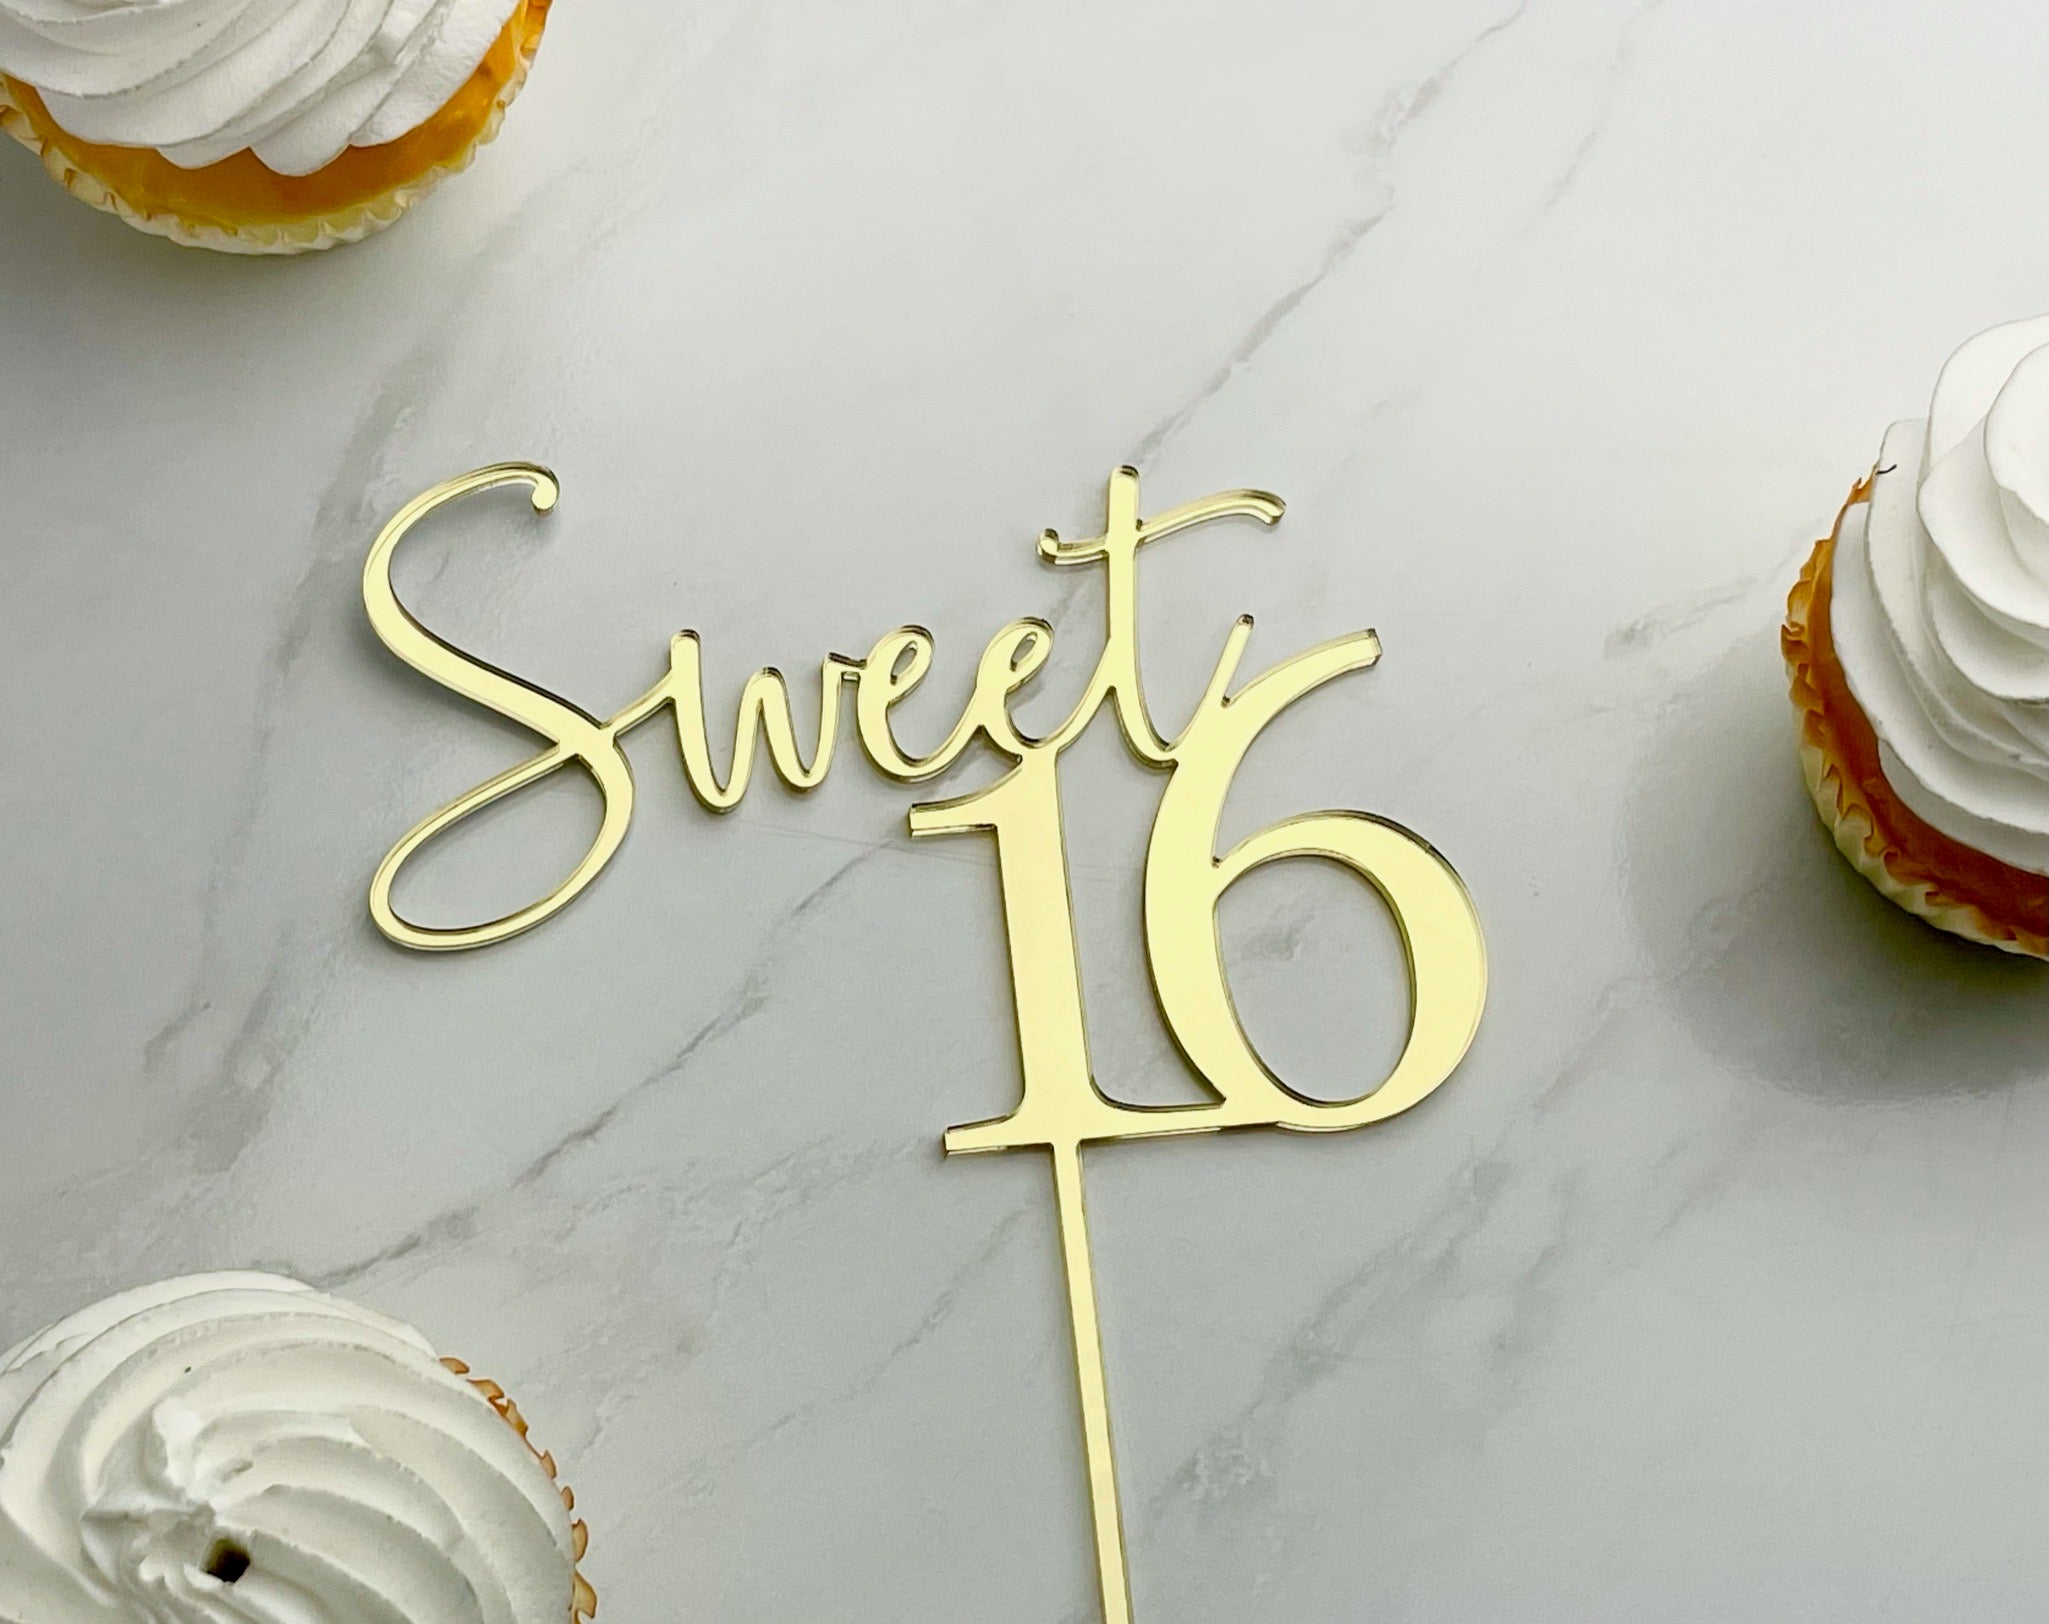 Celestial Sweet Sixteen Cake - Sprinkle Bakes